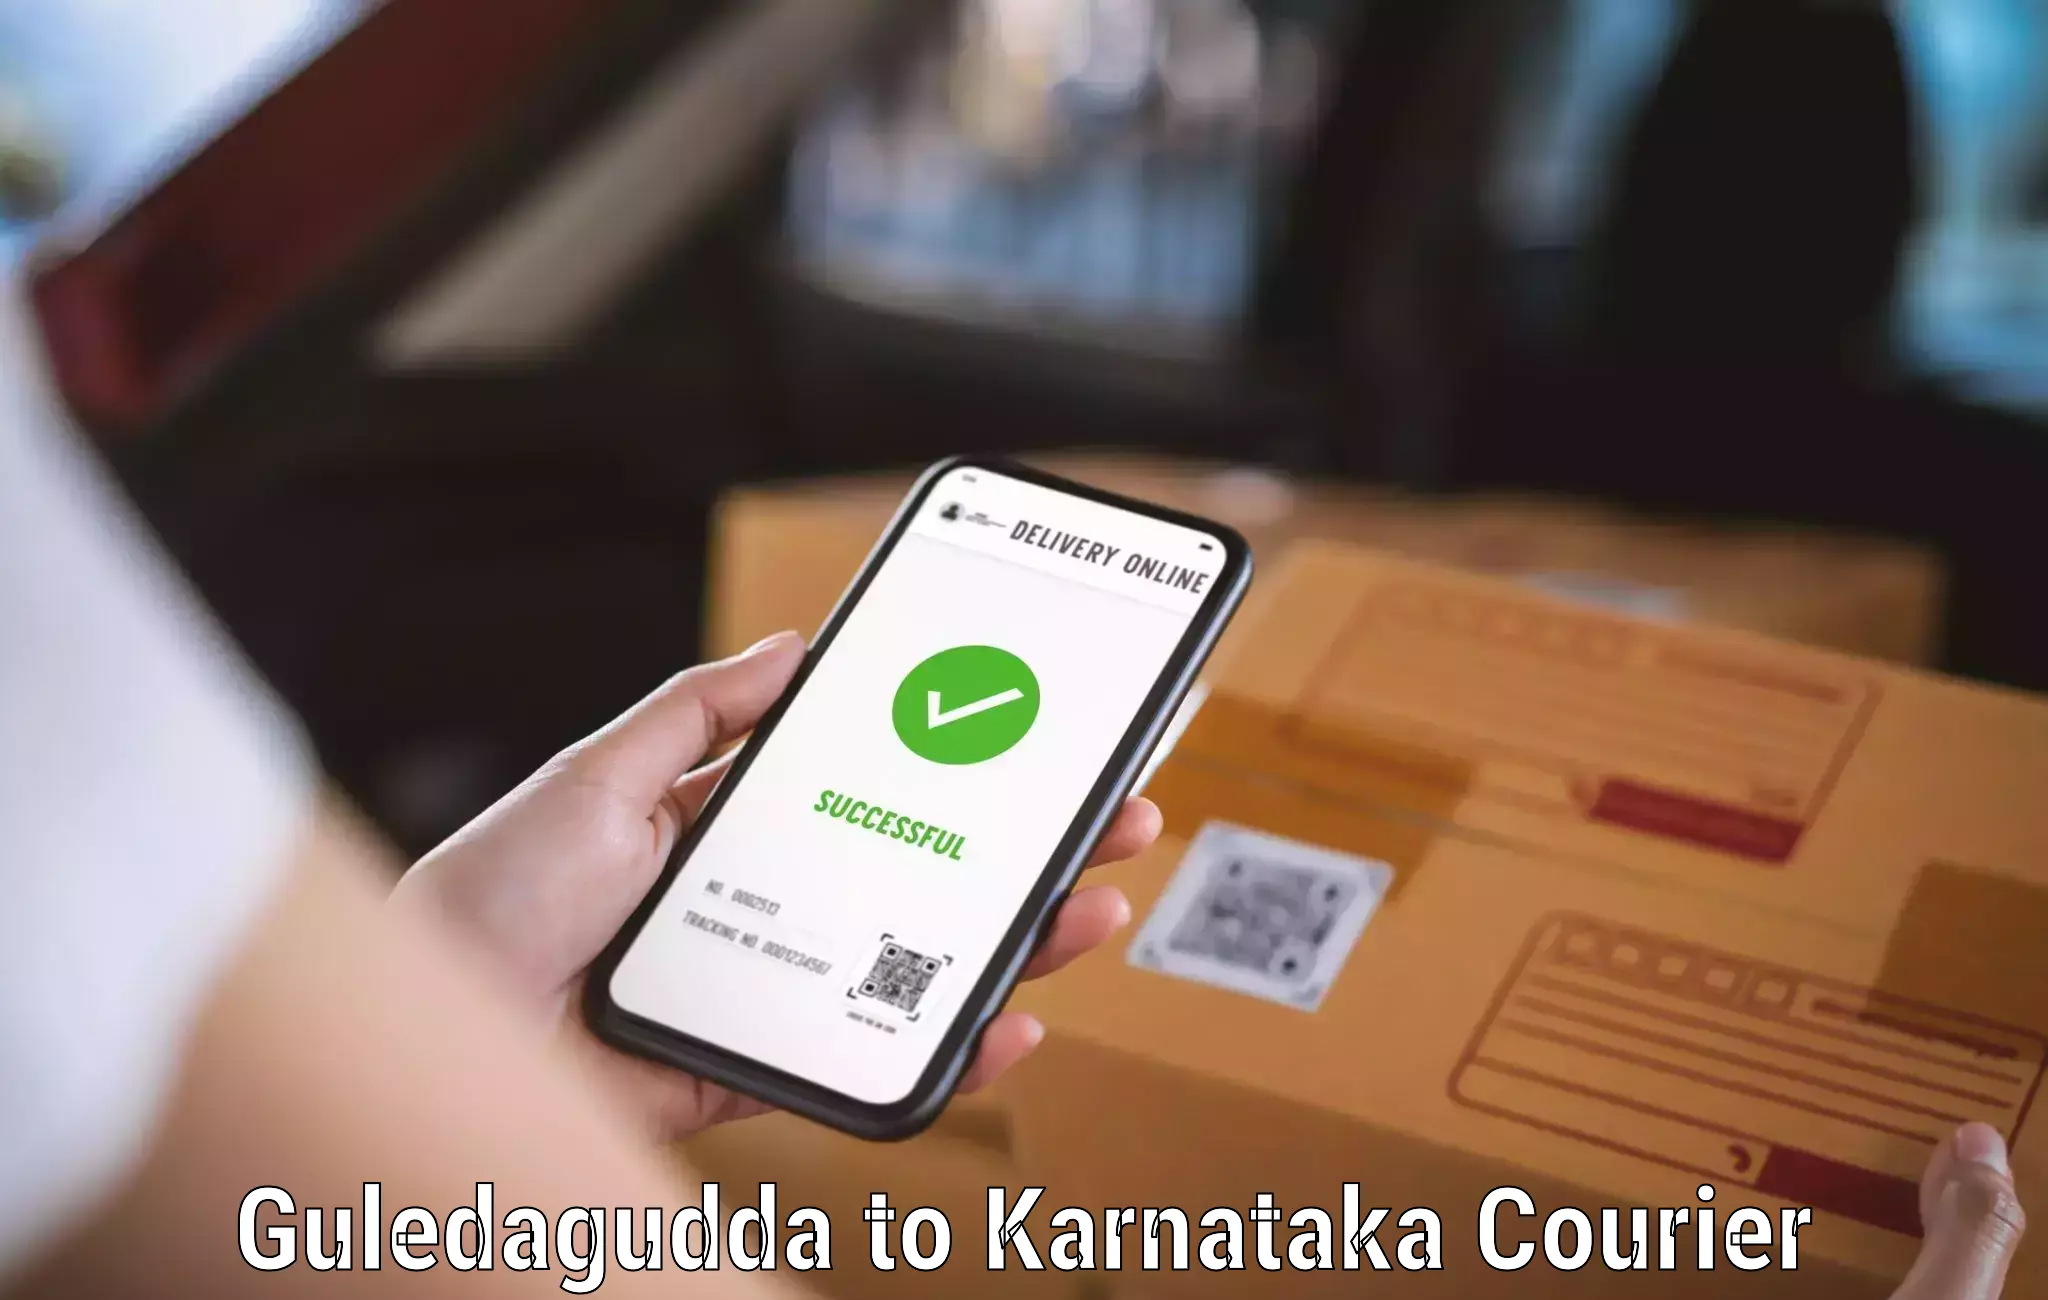 On-demand delivery in Guledagudda to Chikkamagalur